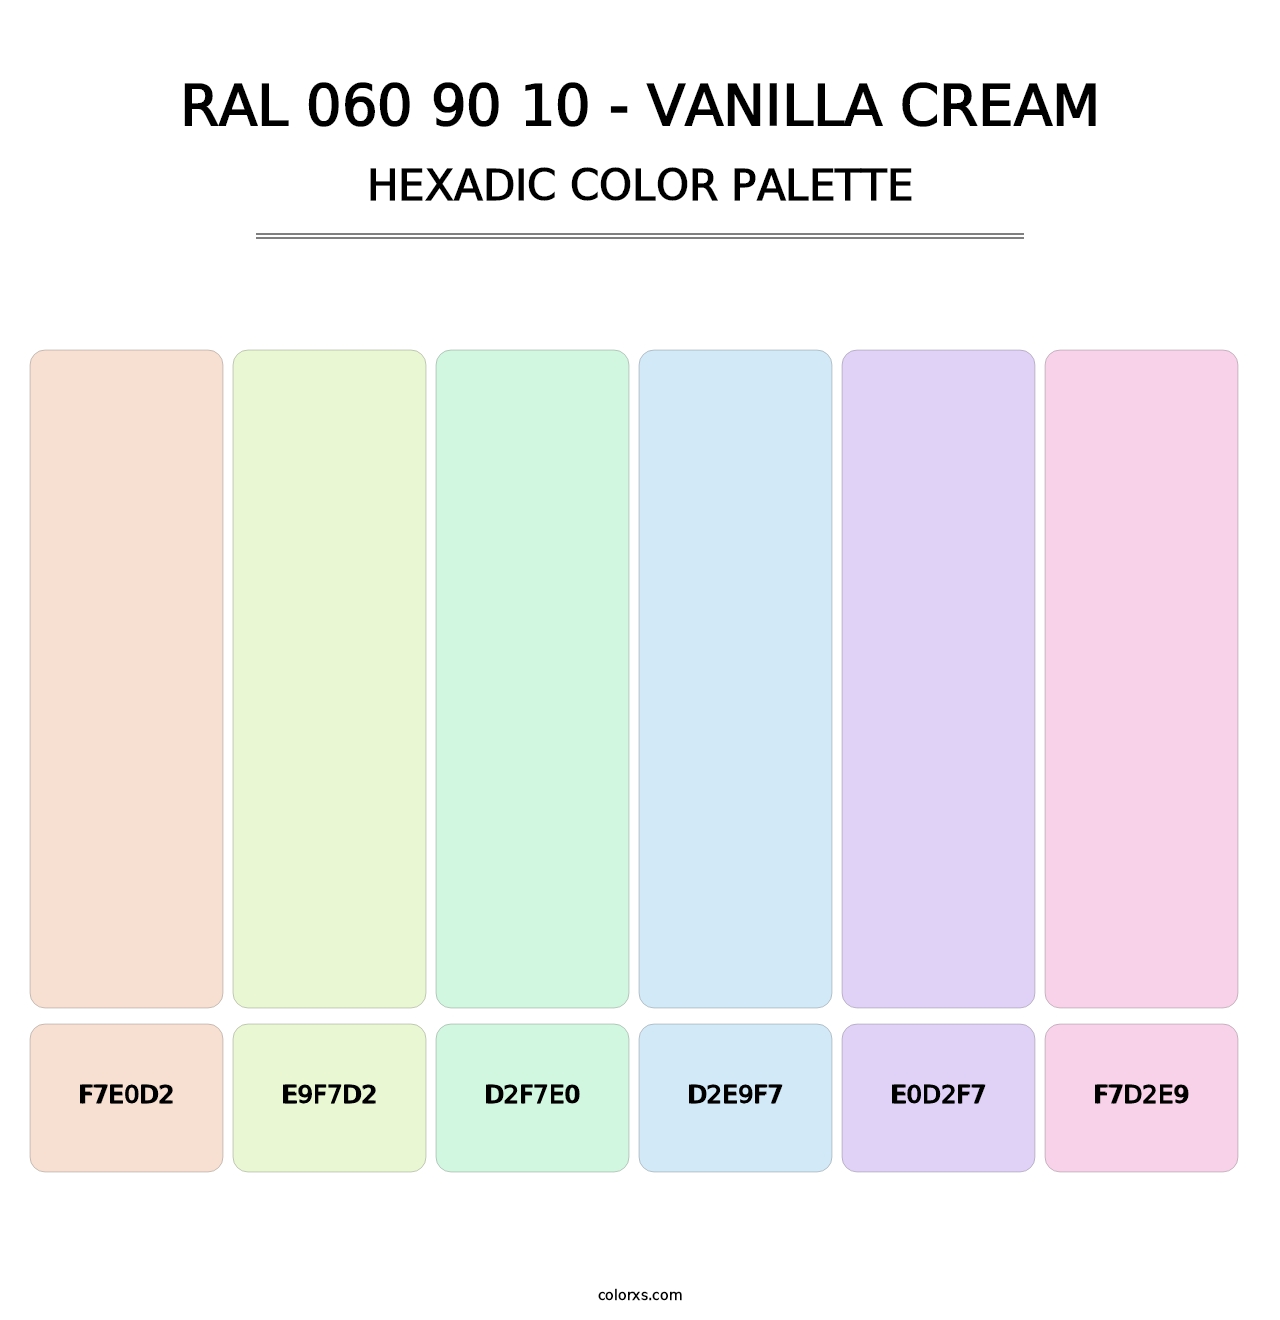 RAL 060 90 10 - Vanilla Cream - Hexadic Color Palette